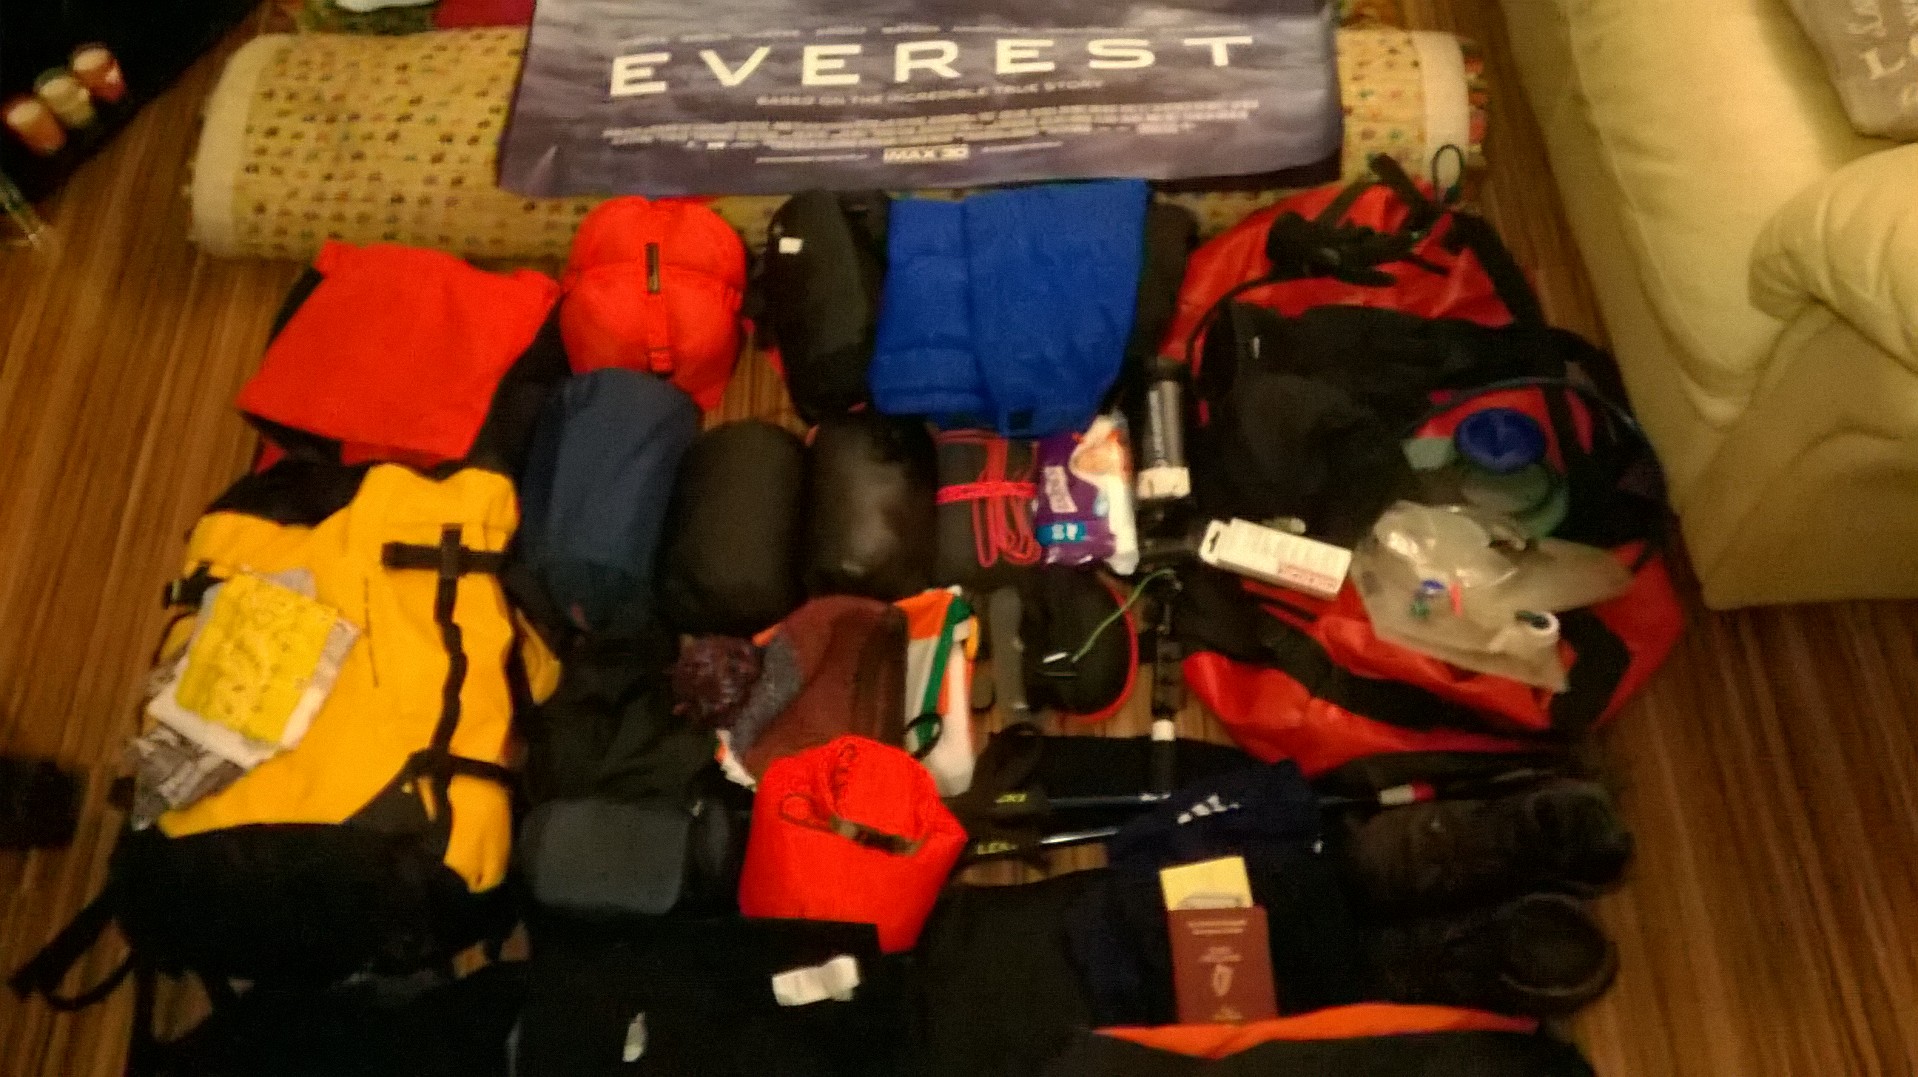 My kit for Everest base camp